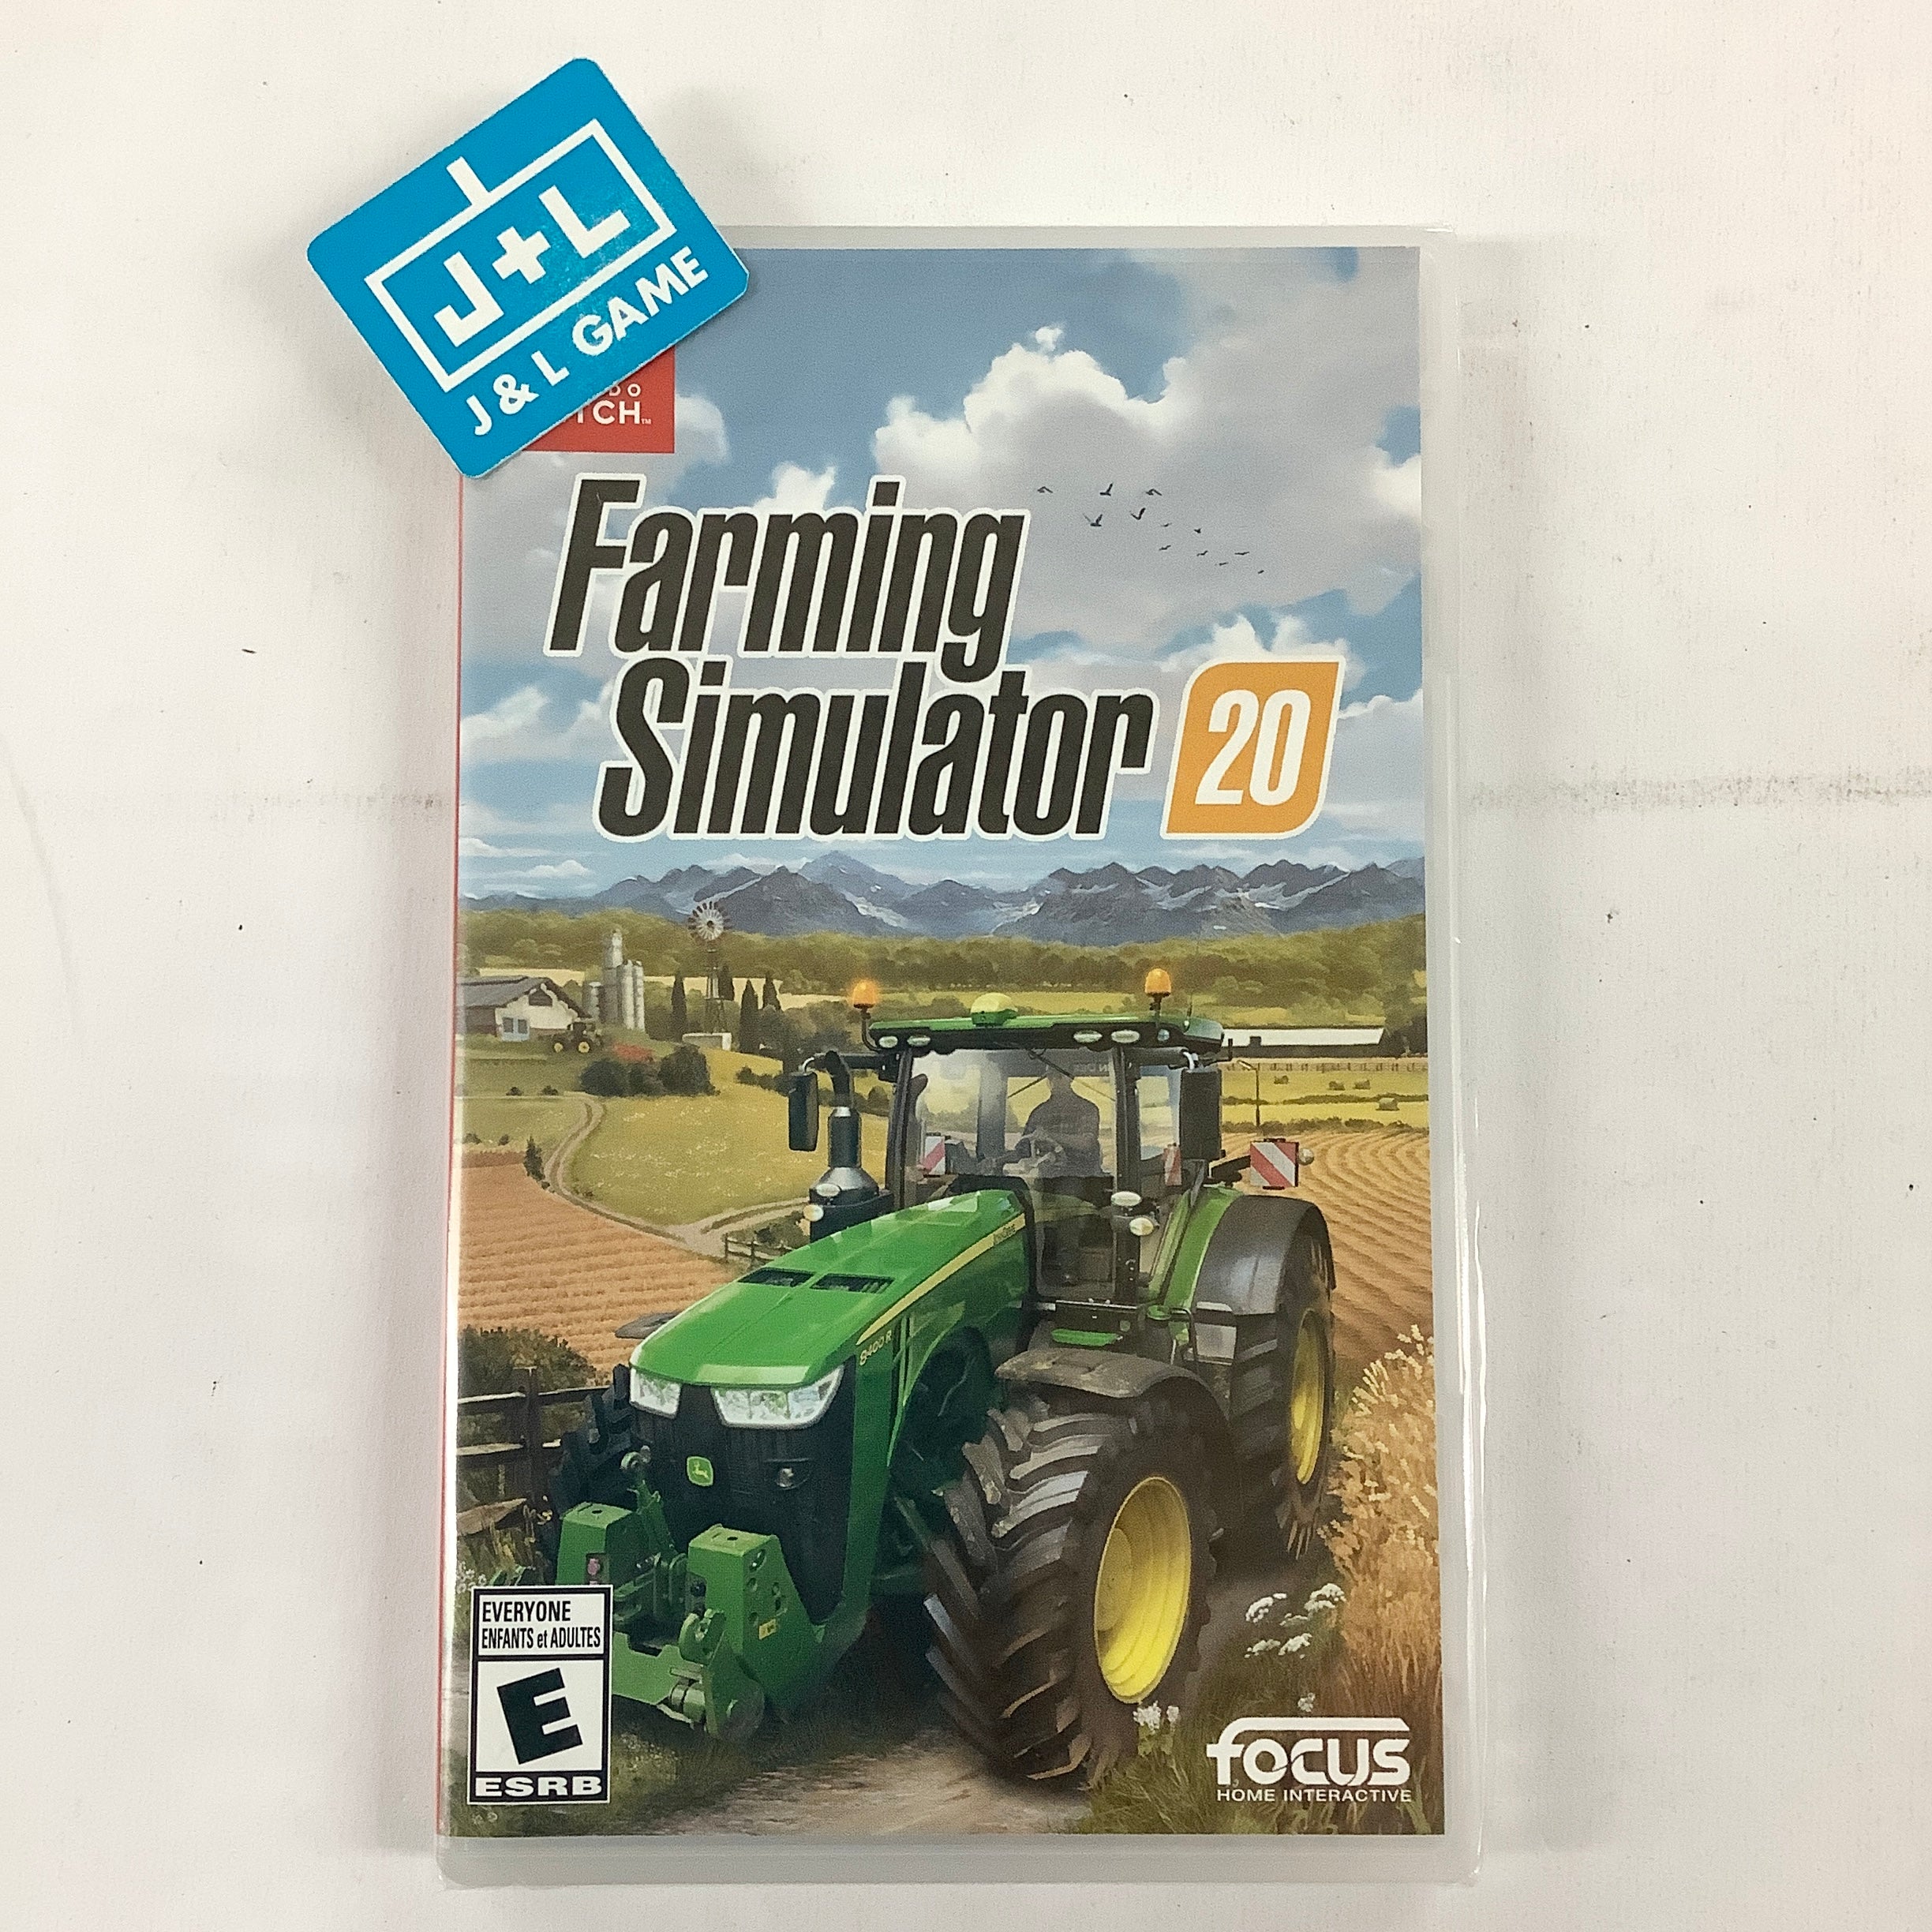 Farming Simulator 20 - (NSW) Nintendo Switch Video Games Focus Home Interactive   